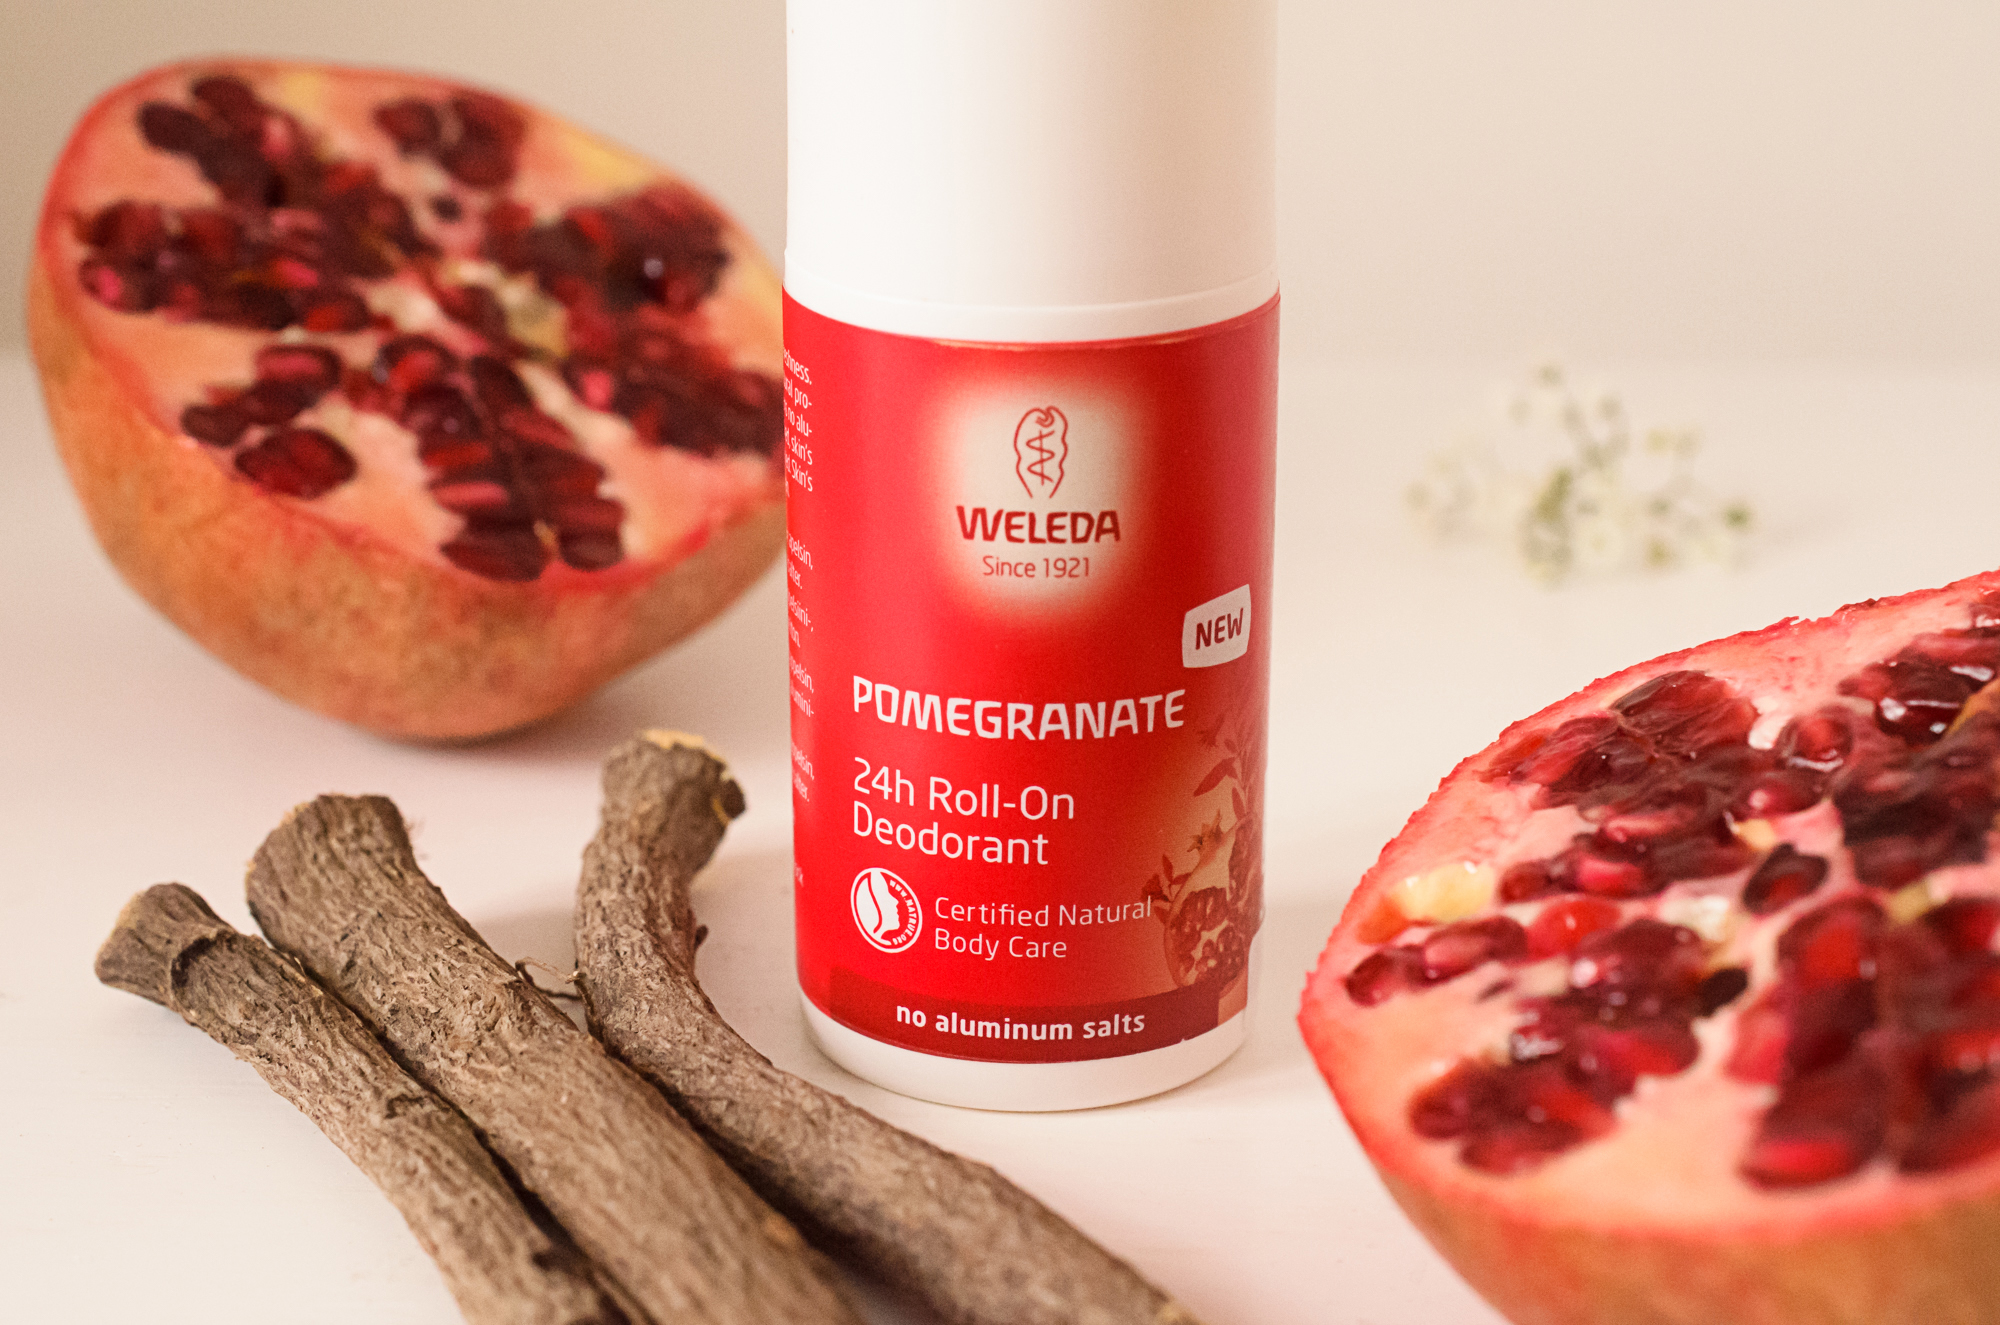 Weleda Pomegranate Deodorant review